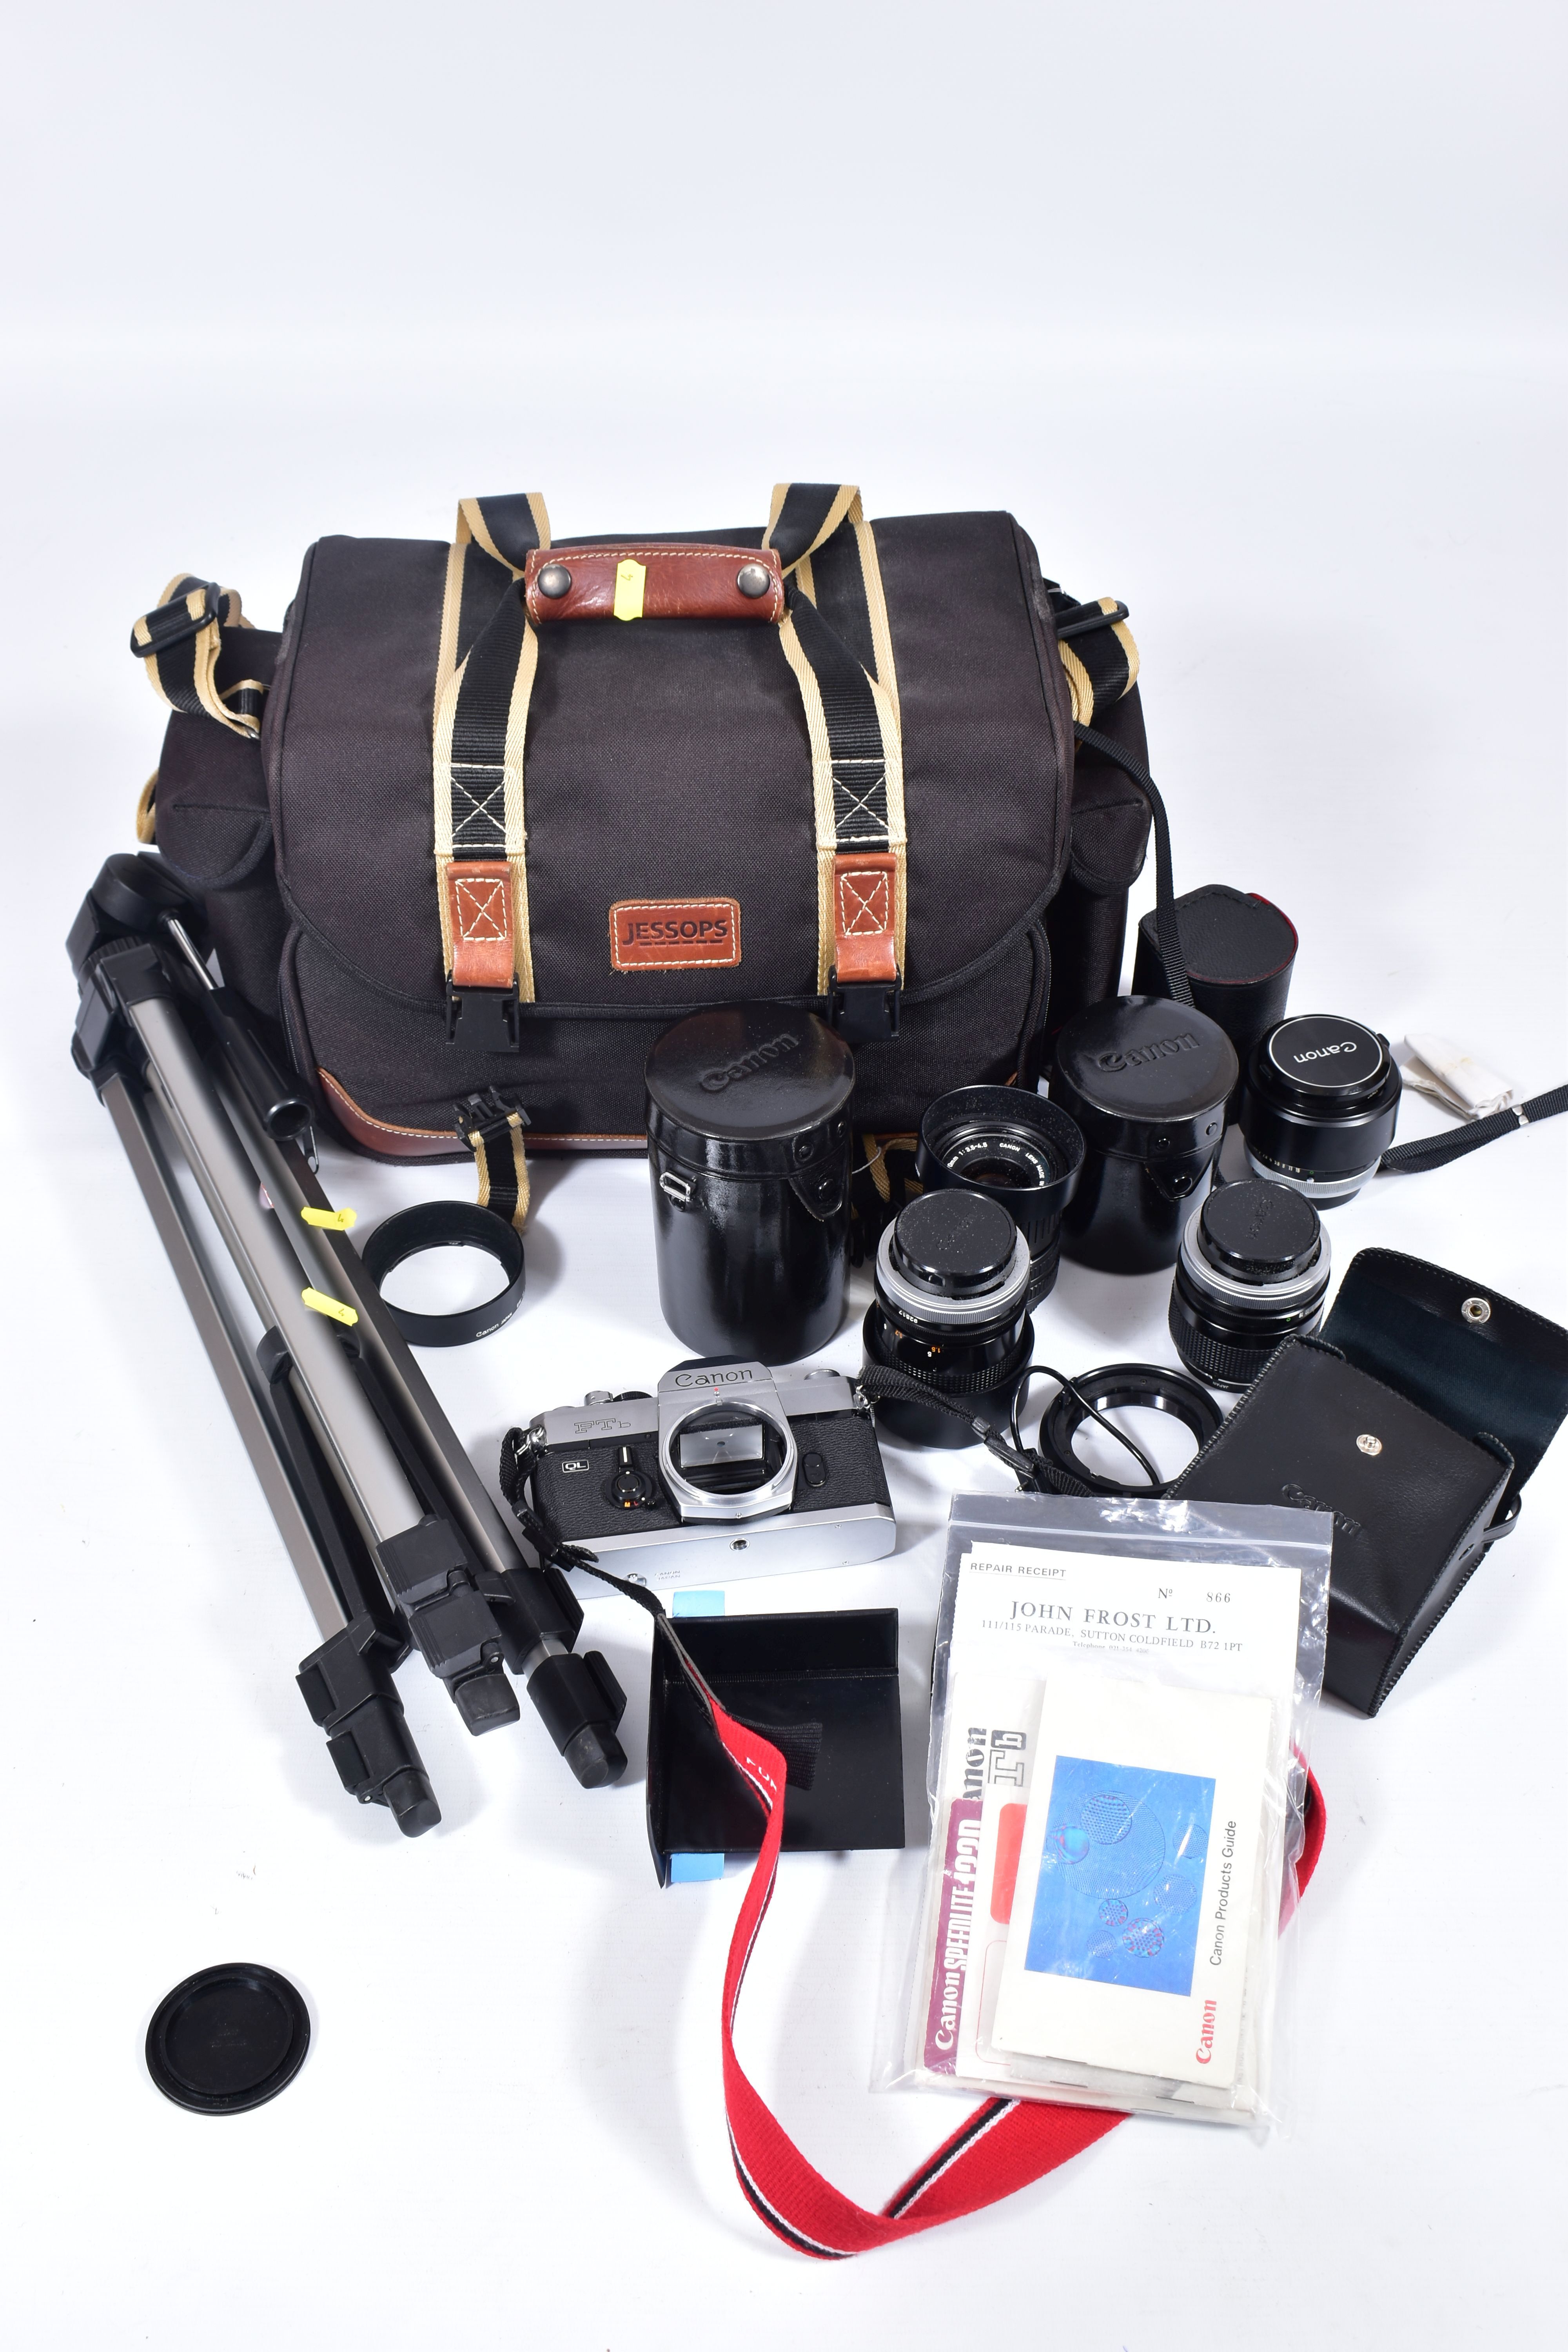 A CAMERA BAG CONTAINING A CANON FTb QL FILM SLR CAMERA , a FD SSC 50mm f1.4 lens, a FD 35mm f2 in